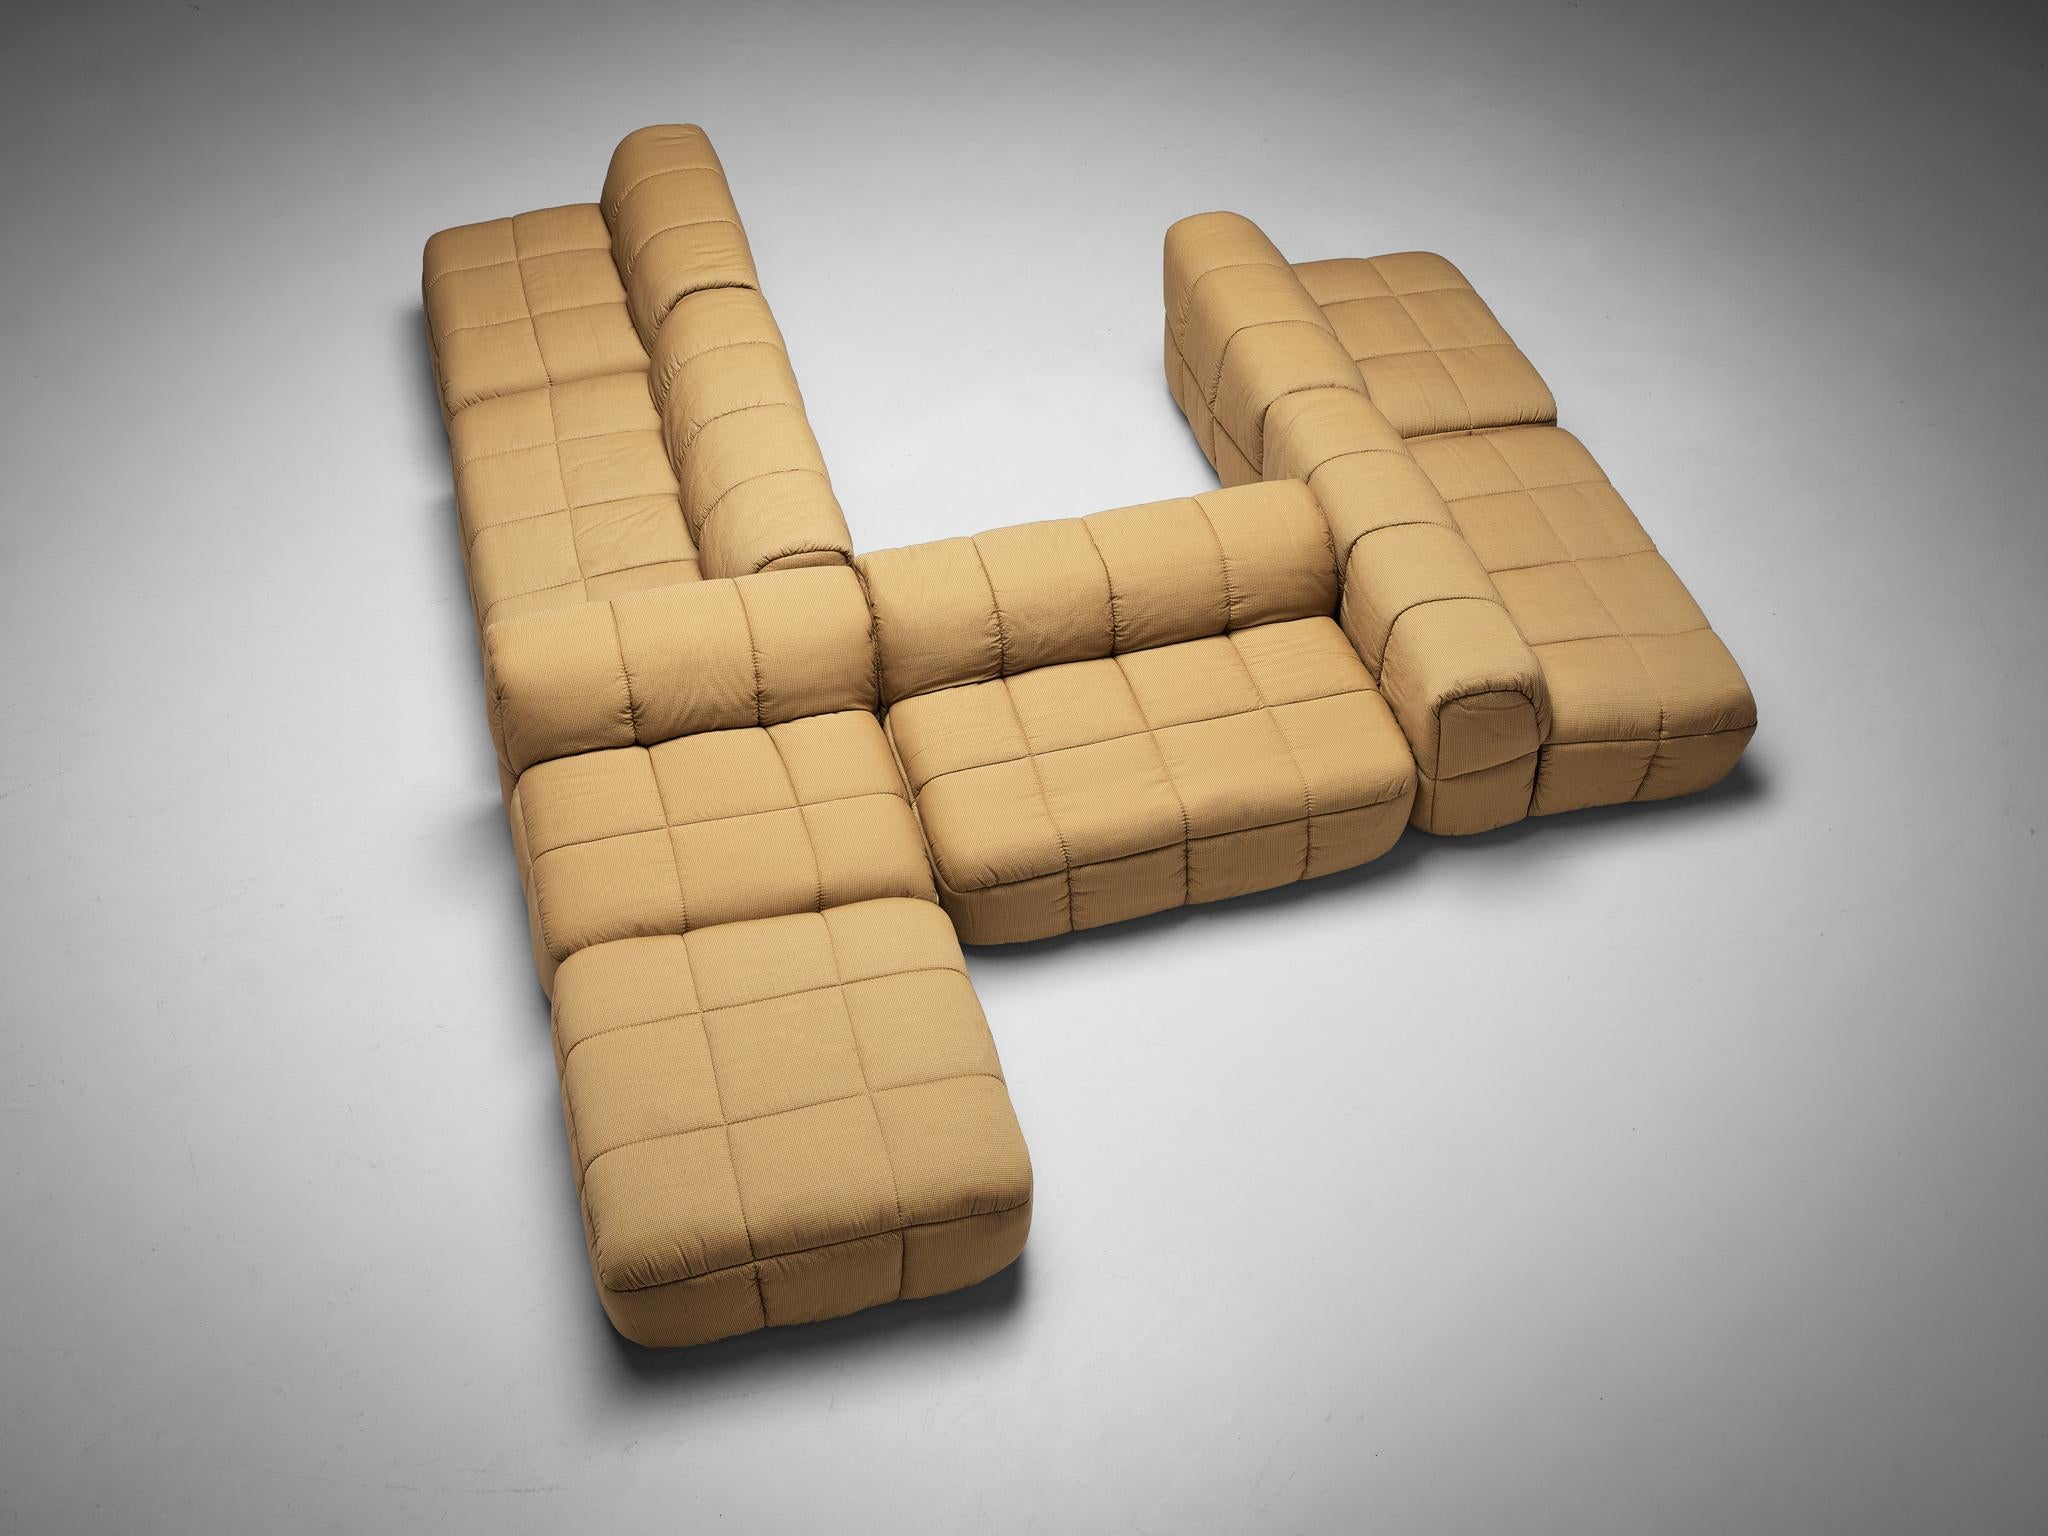 Cini Boeri for Arflex Modular 'Strips' Sofa 3